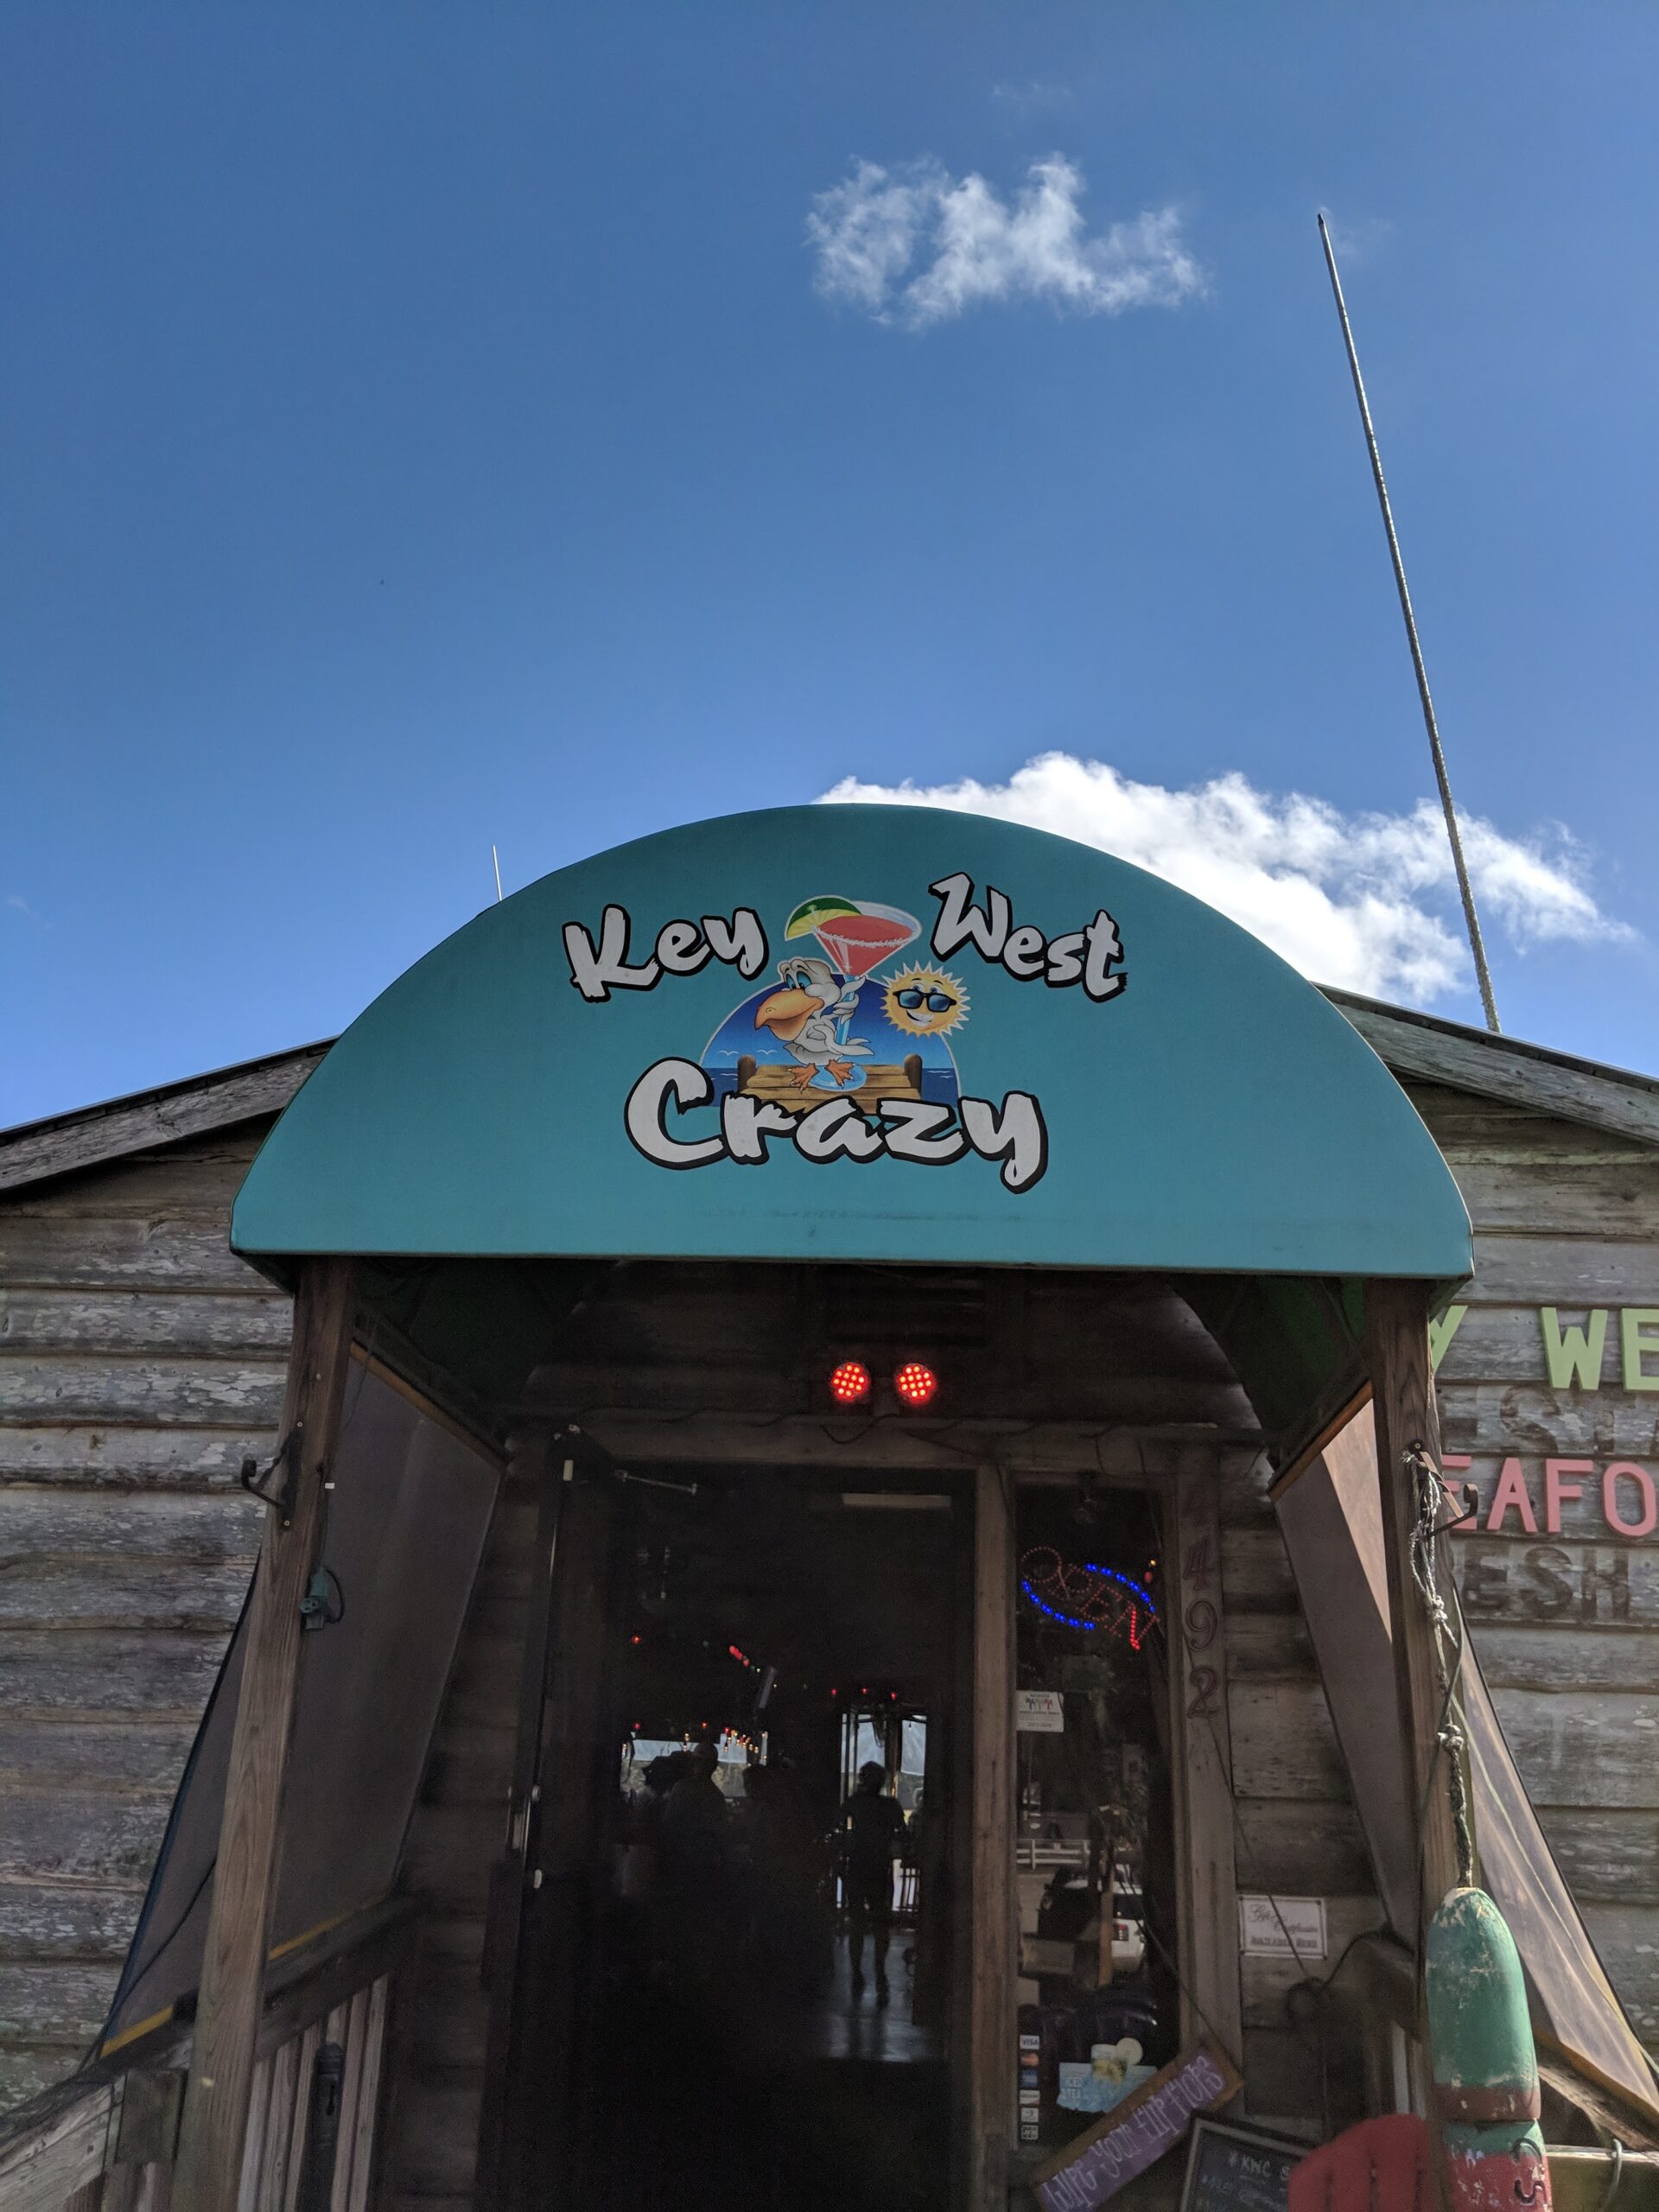 Key West Crazy Waterfront Restaurant & Bar